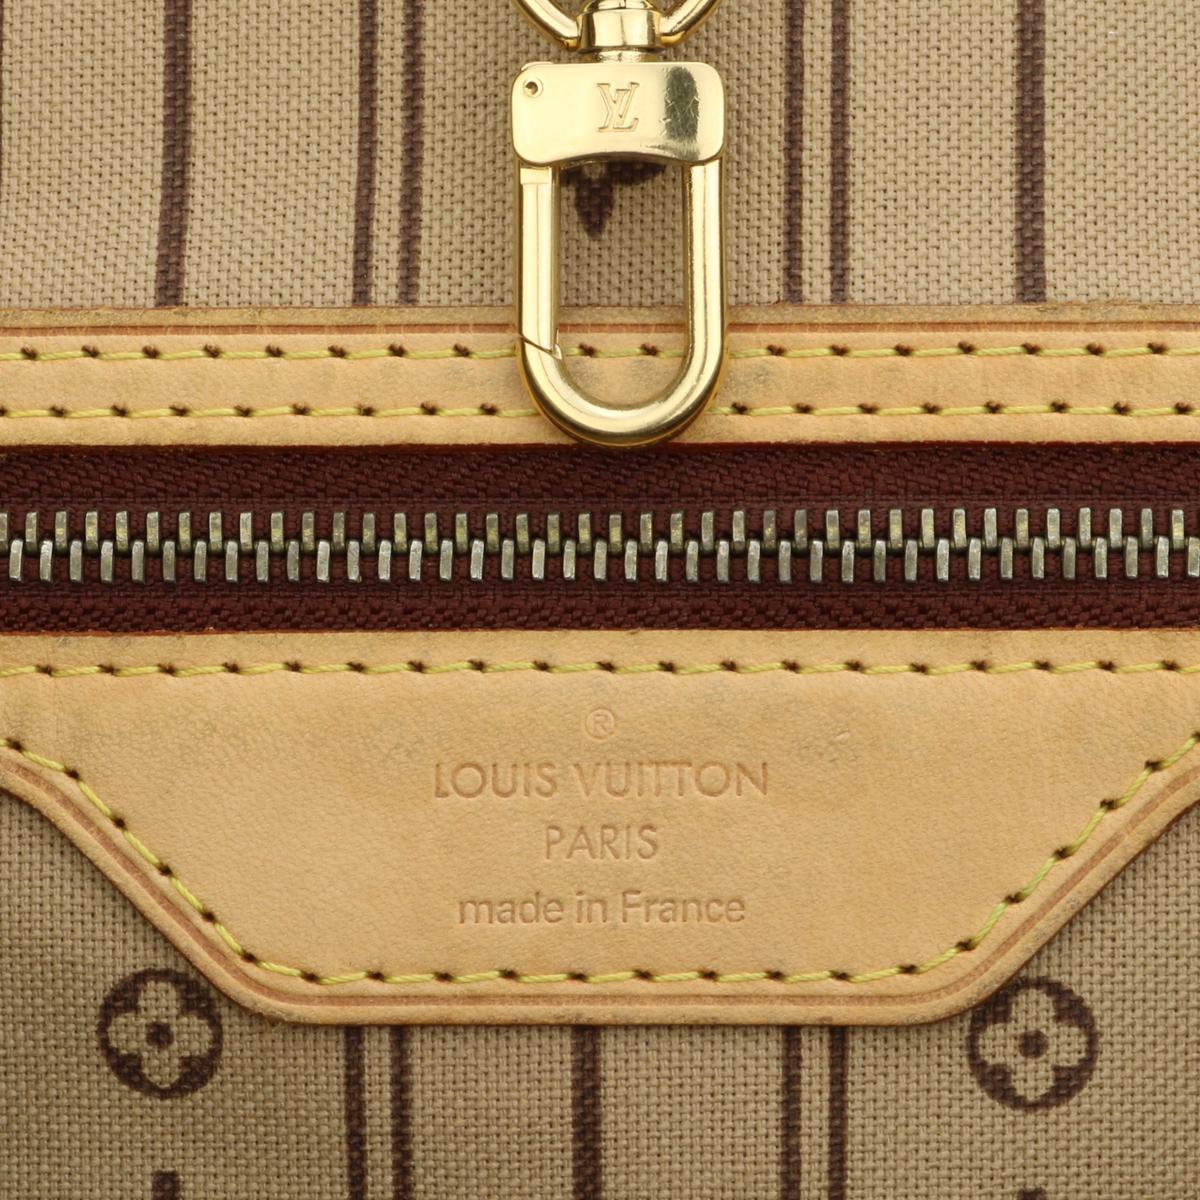 Louis Vuitton Neverfull GM in Monogram with Beige Interior 2007 11